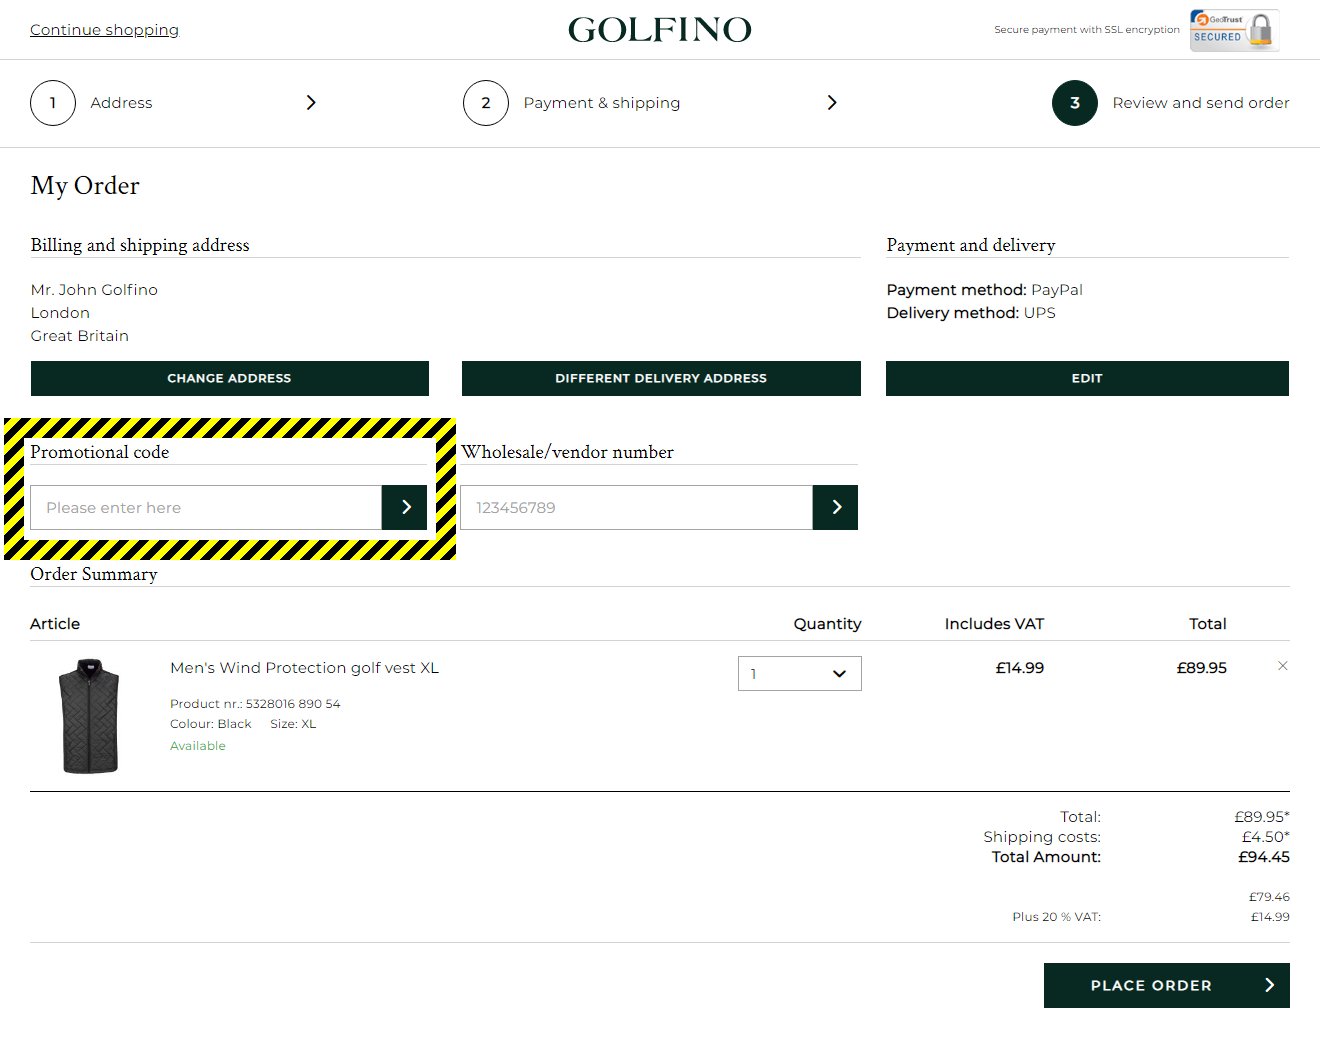 Golfino Discount Code